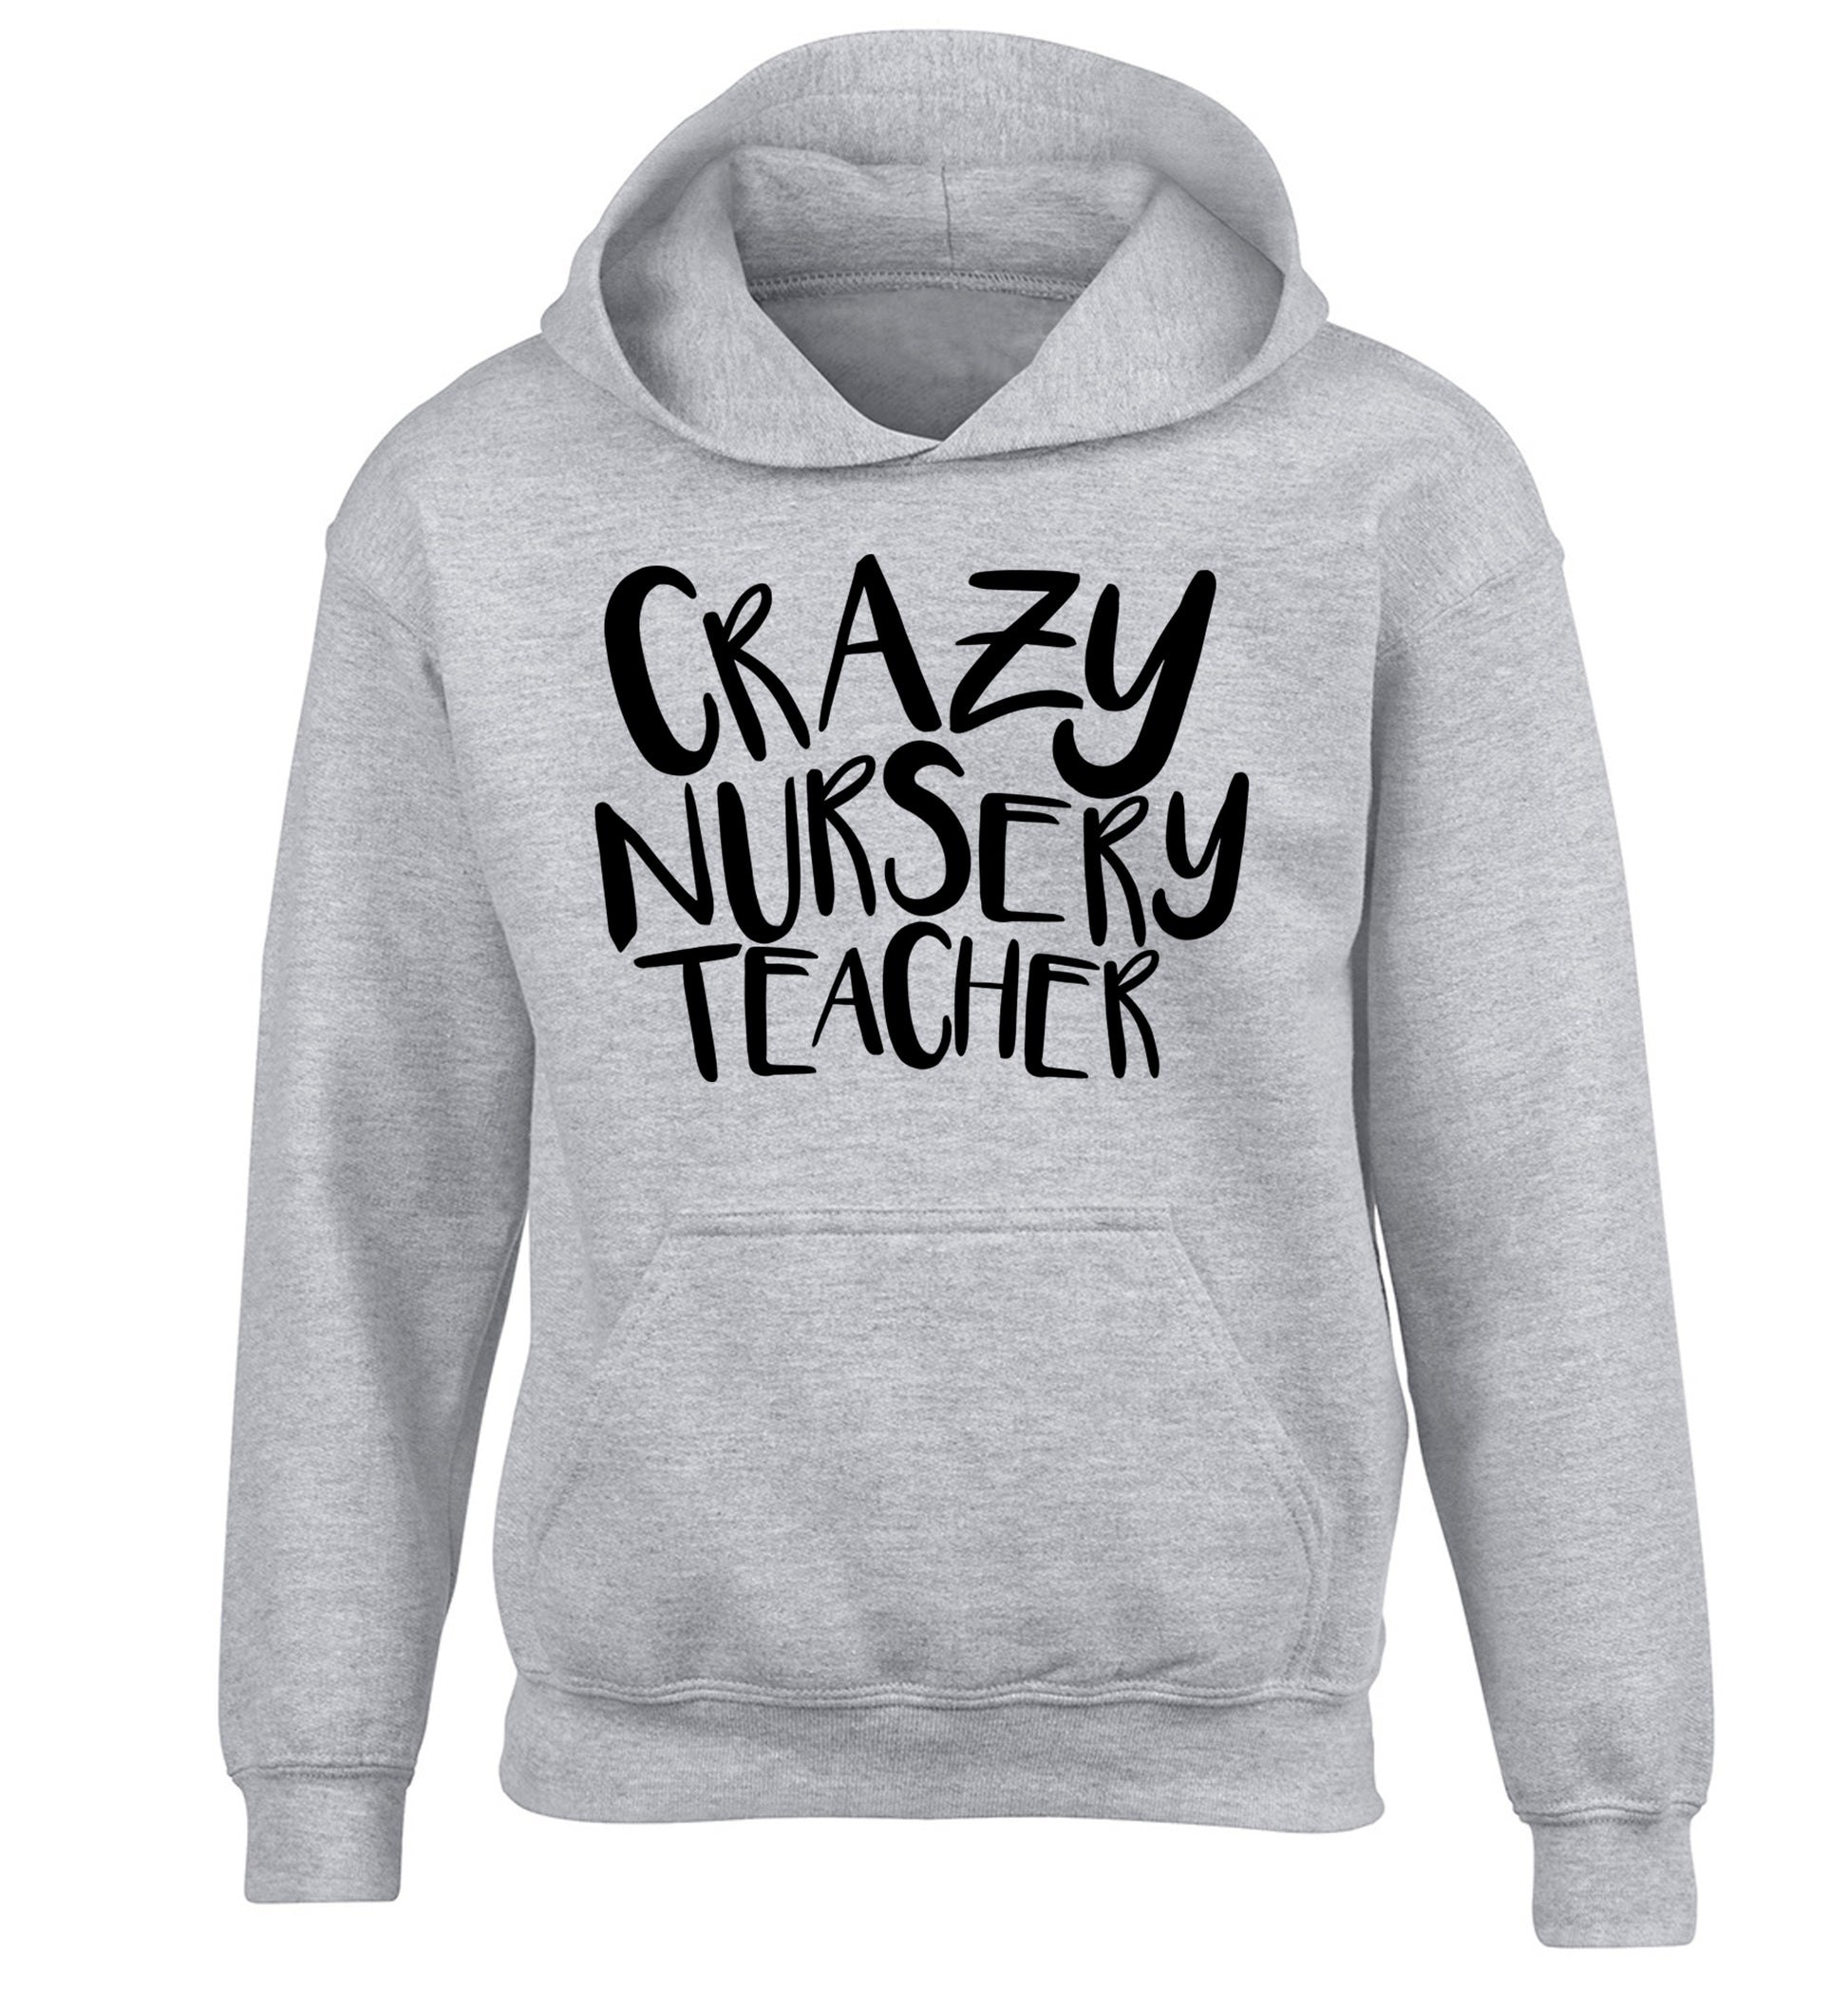 Crazy nursery teacher children's grey hoodie 12-13 Years